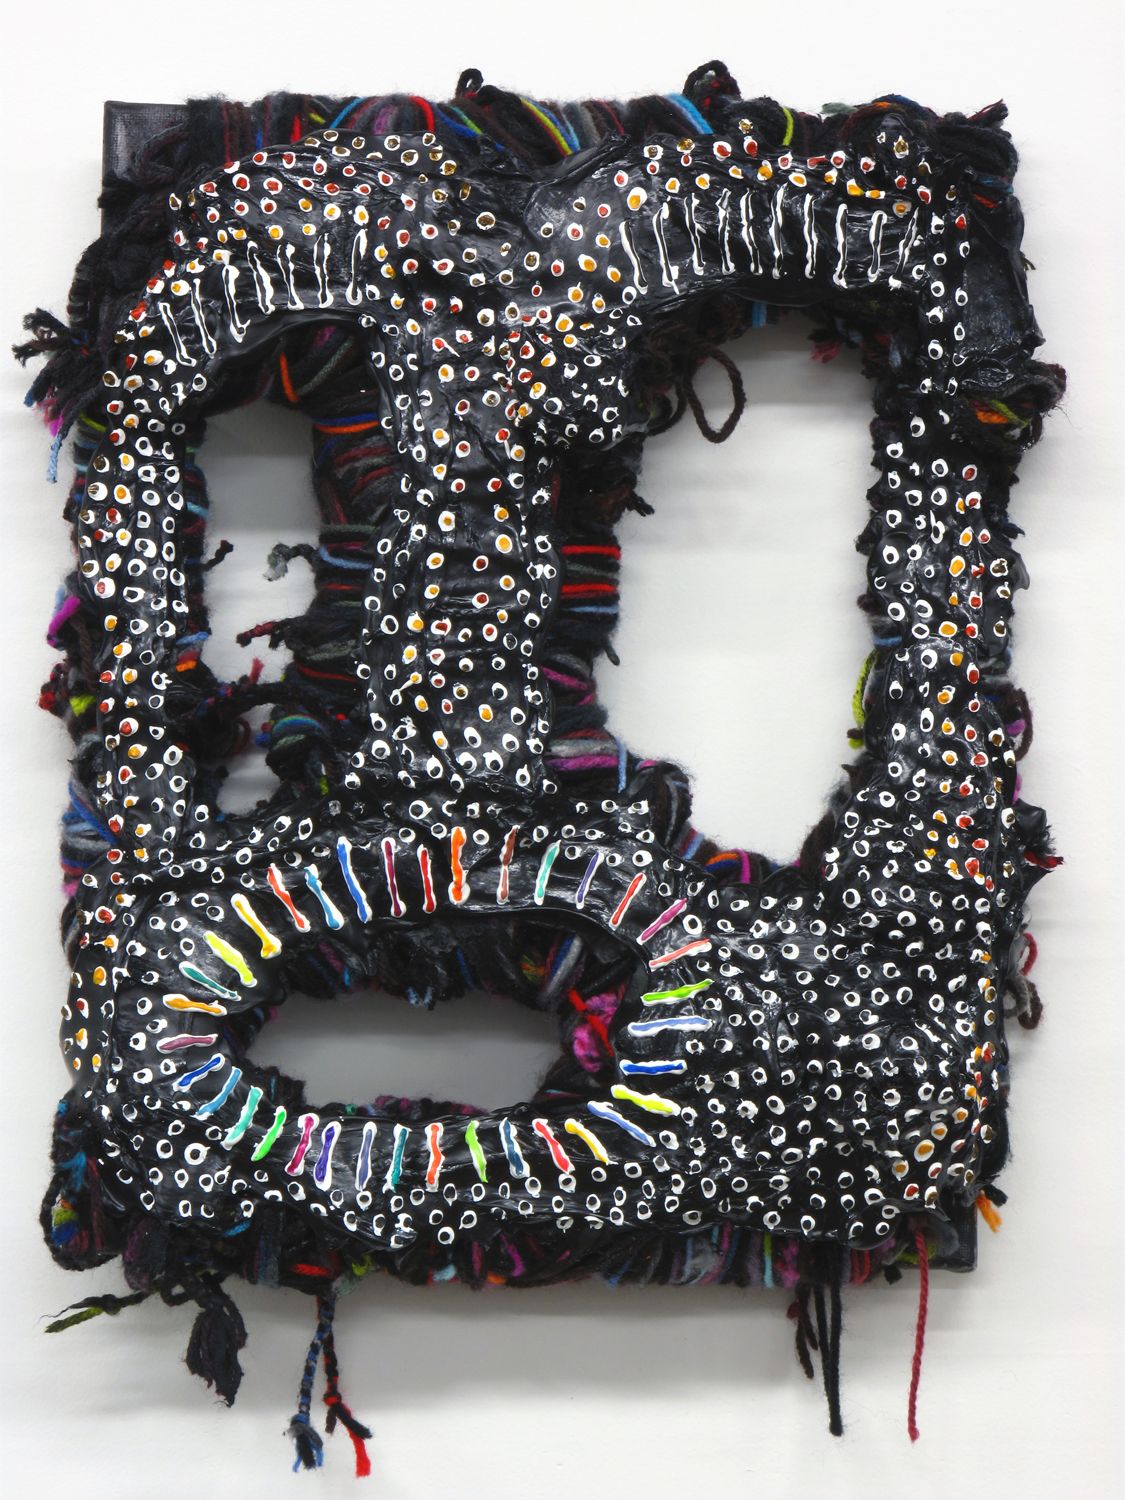 Jacin Giordano, Mask for hunting rainbows (dot face), 2013, yarn and acrylic on canvas, 16 7/8 x 11 3/8 in. (43 x 29 cm), Sultana, Paris